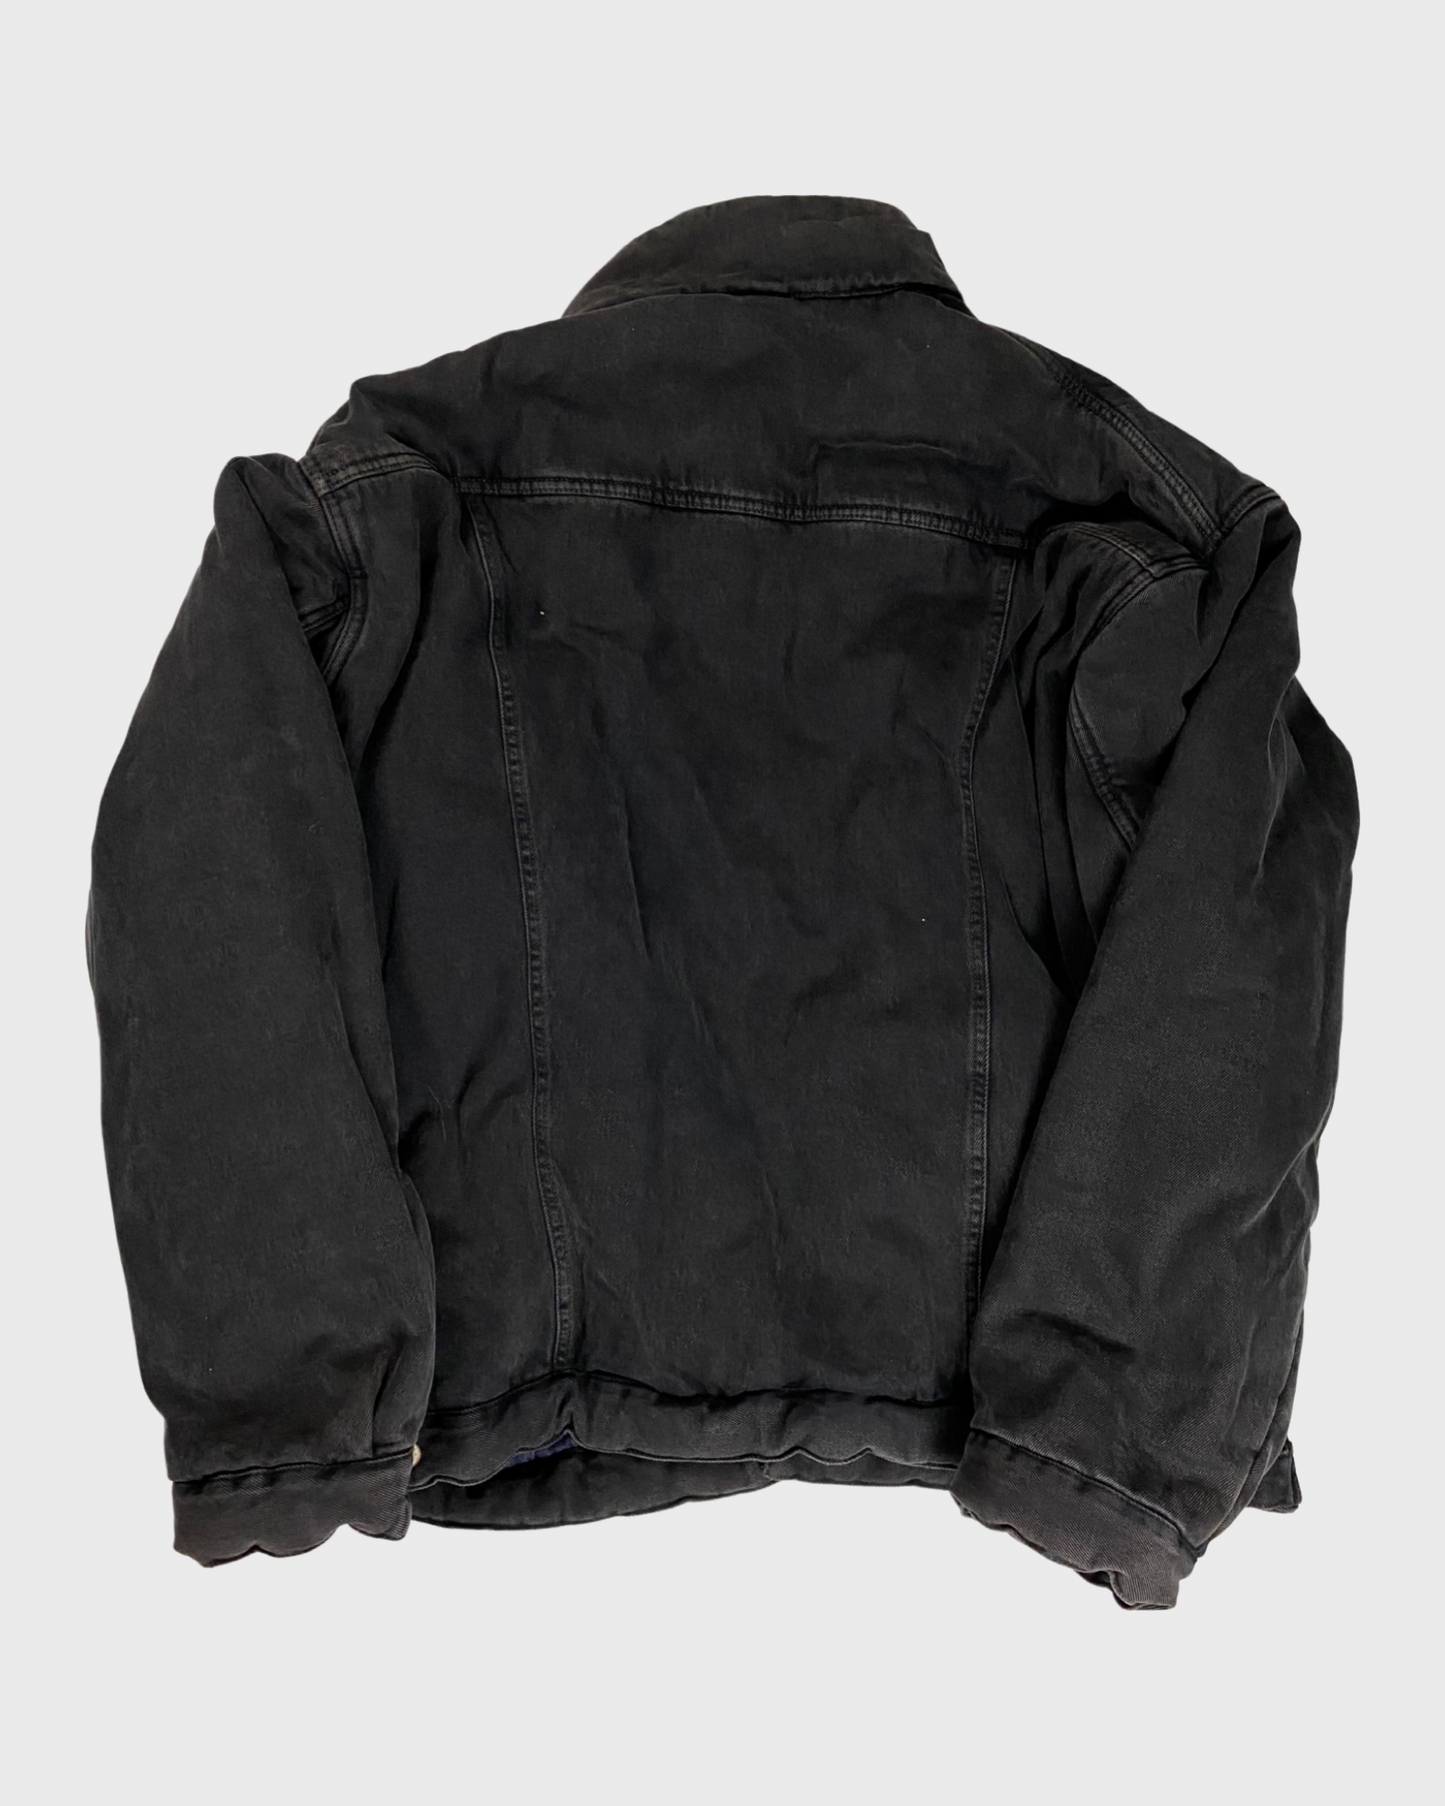 Balenciaga oversized Padded Denim jacket grey black SZ:44